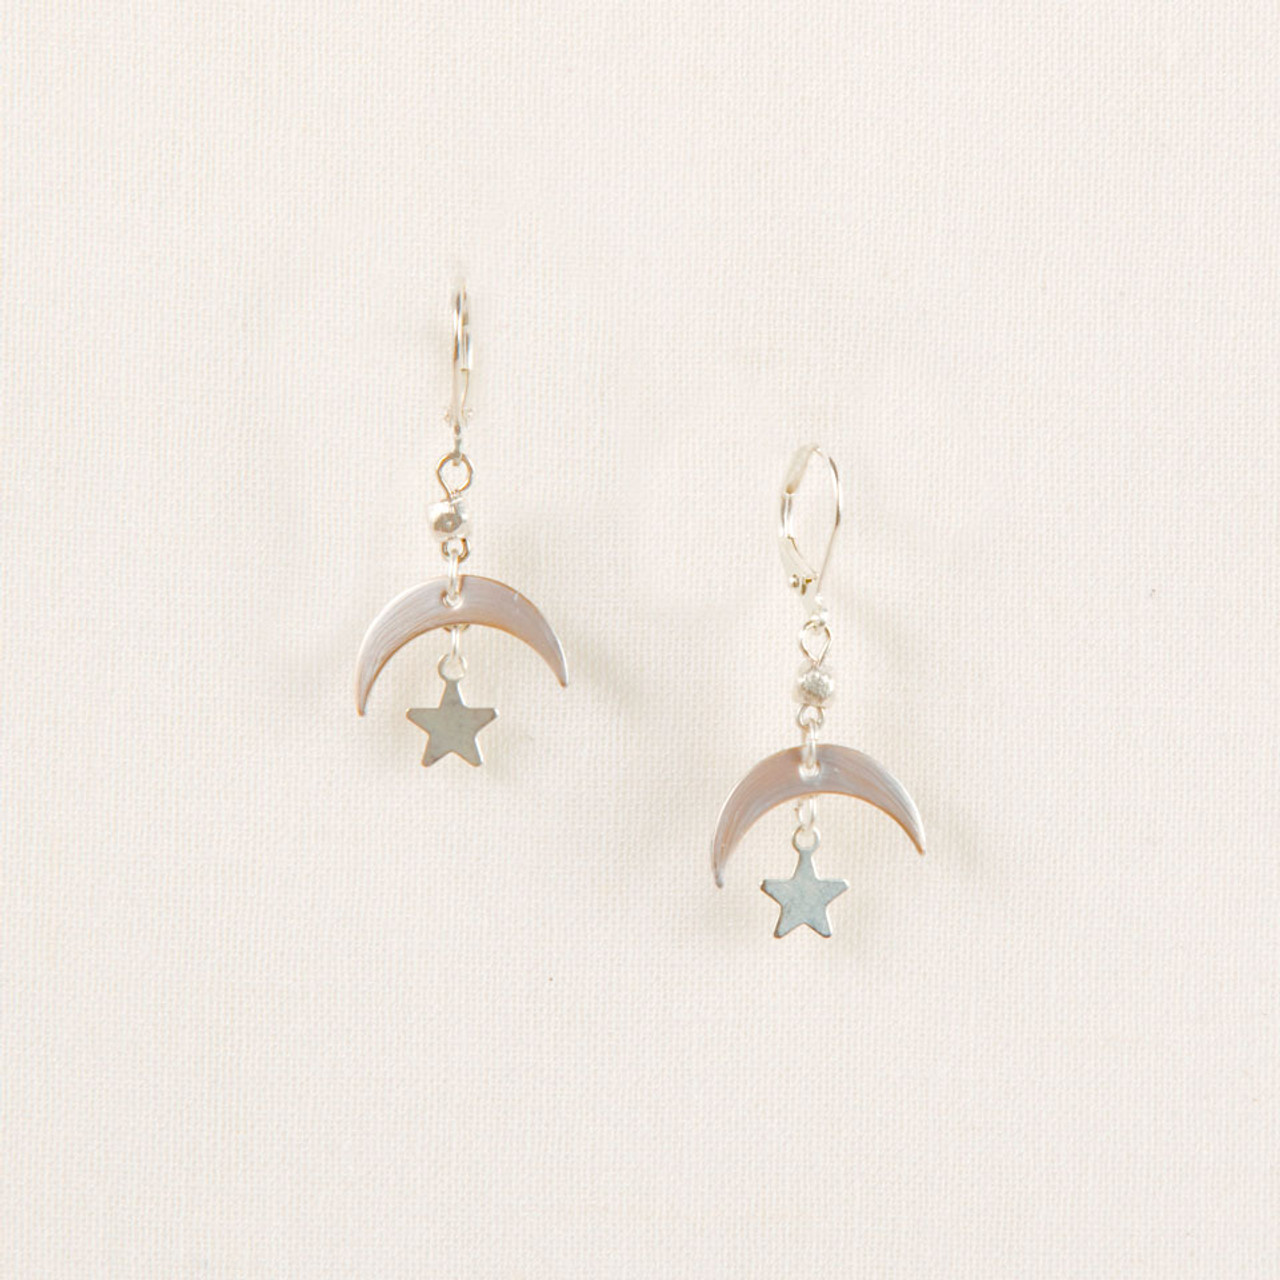 Swarovski Symbolic drop earrings, Moon and star, Blue, Mixed metal finish